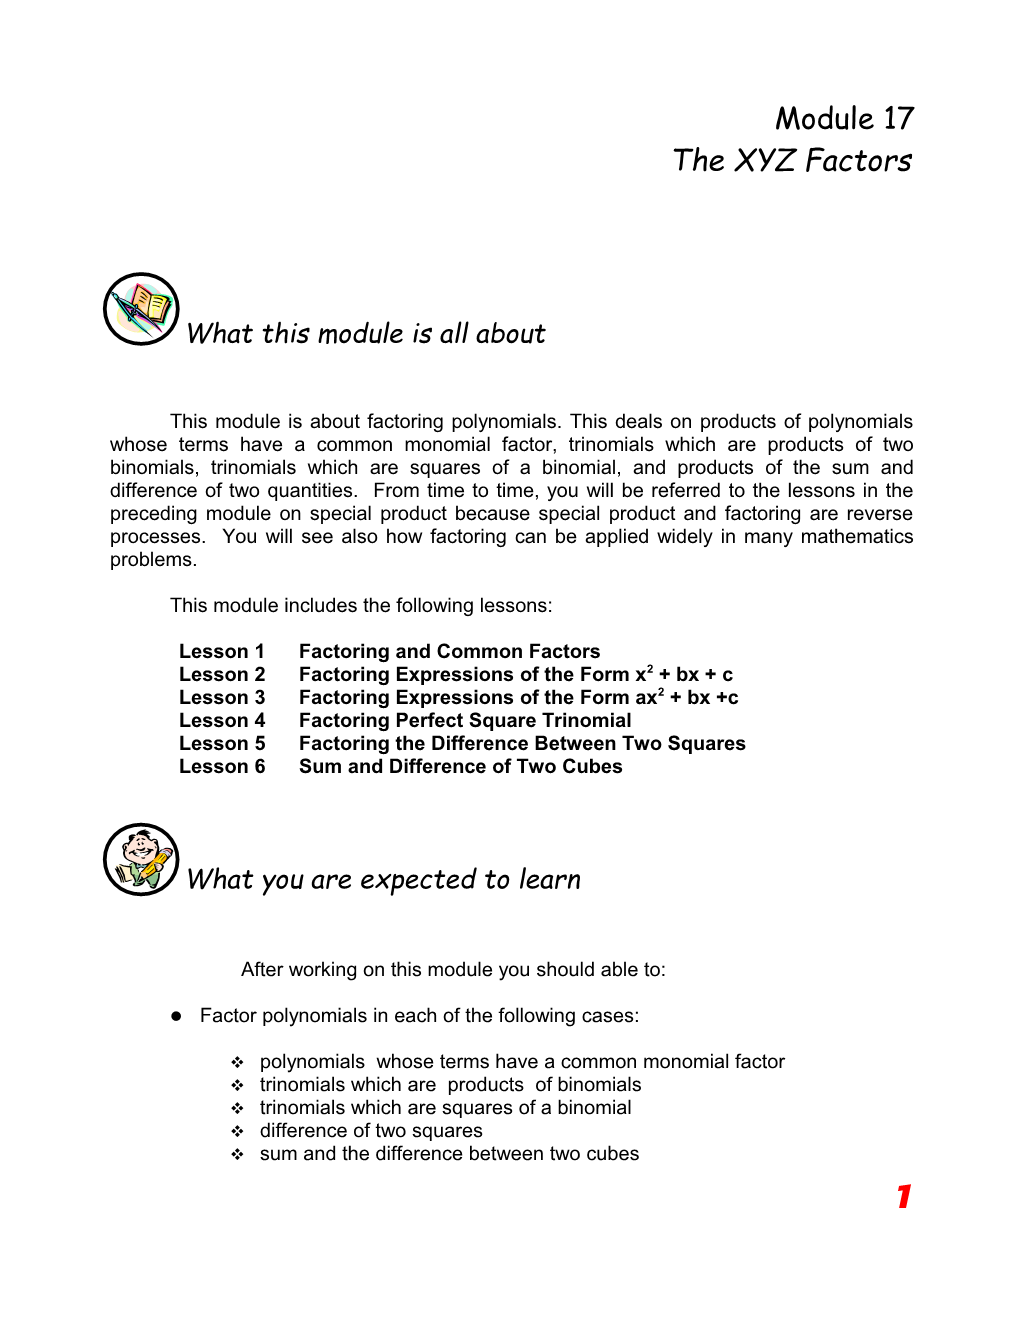 The XYZ Factors